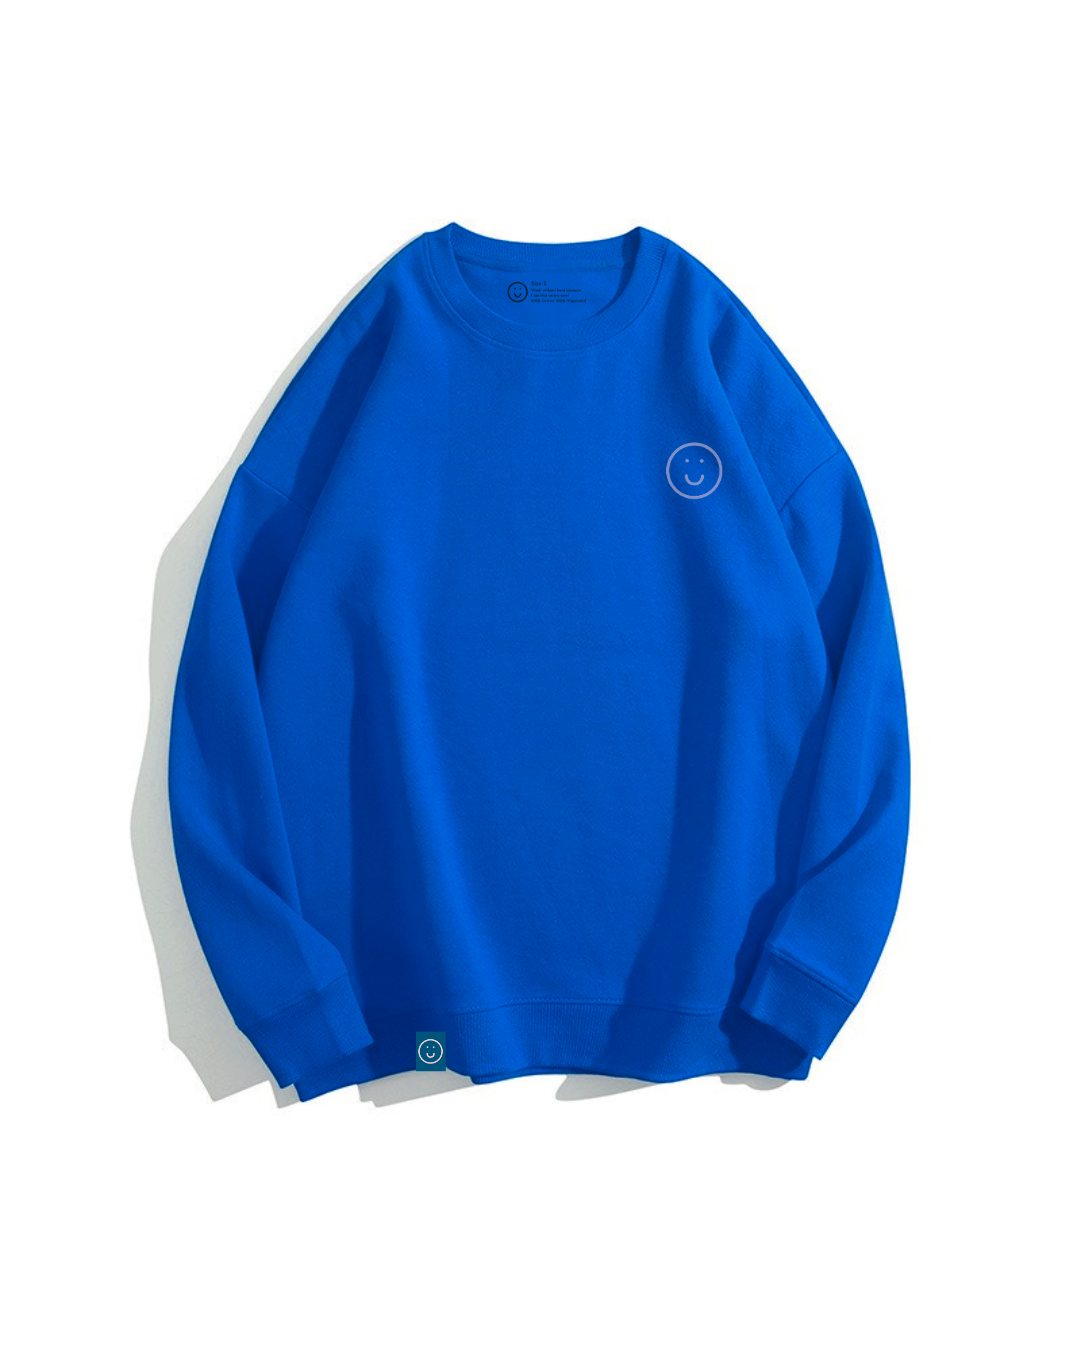 Signature Oversized Sweater in Blue